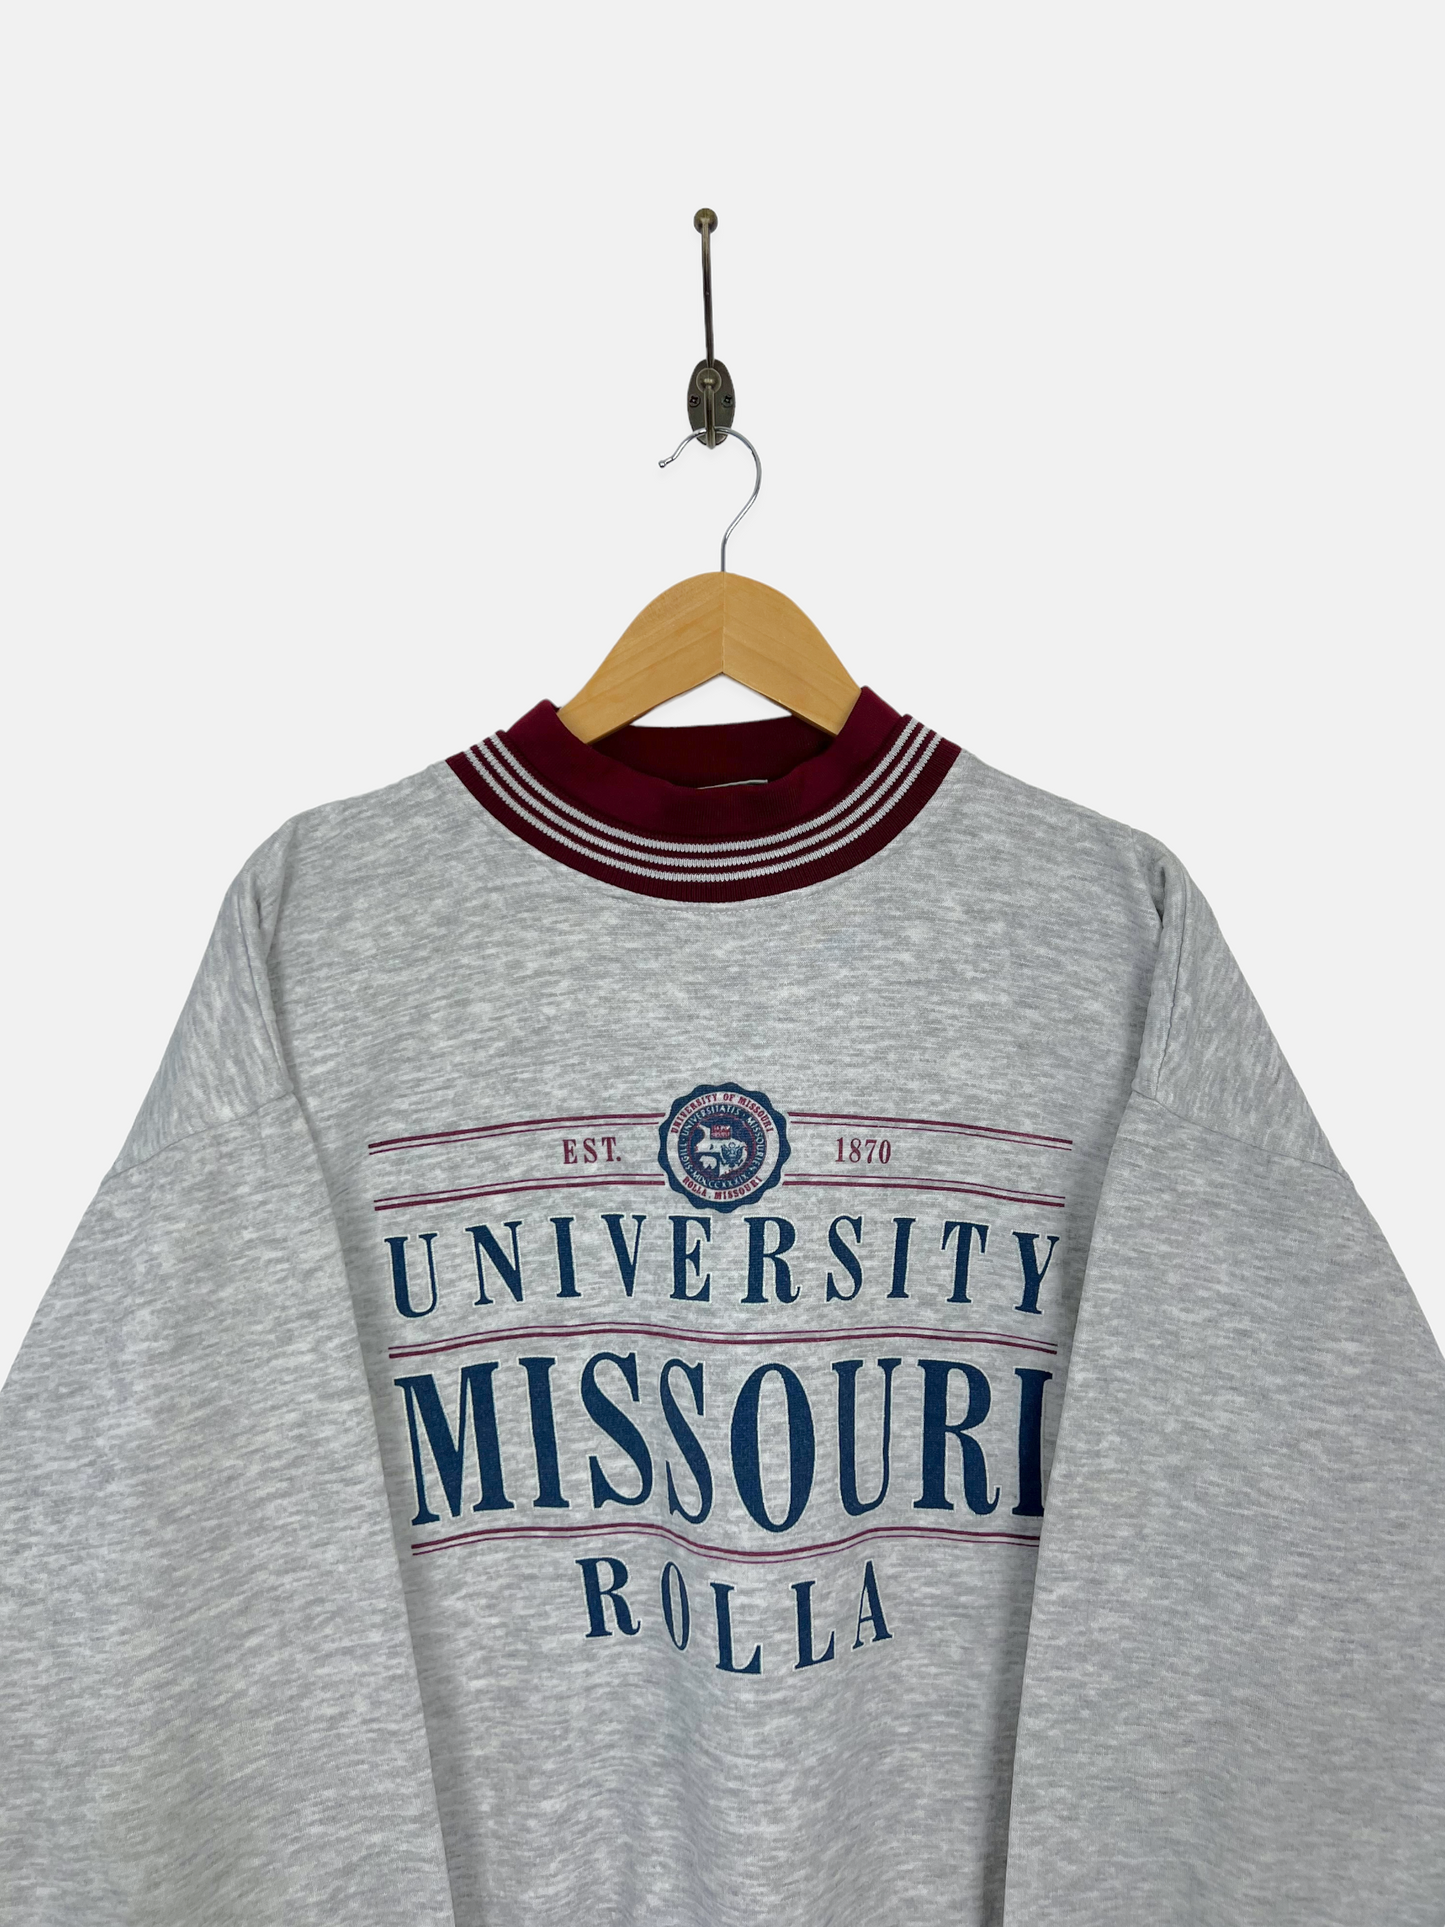 90's Missouri University Vintage Sweatshirt Size M